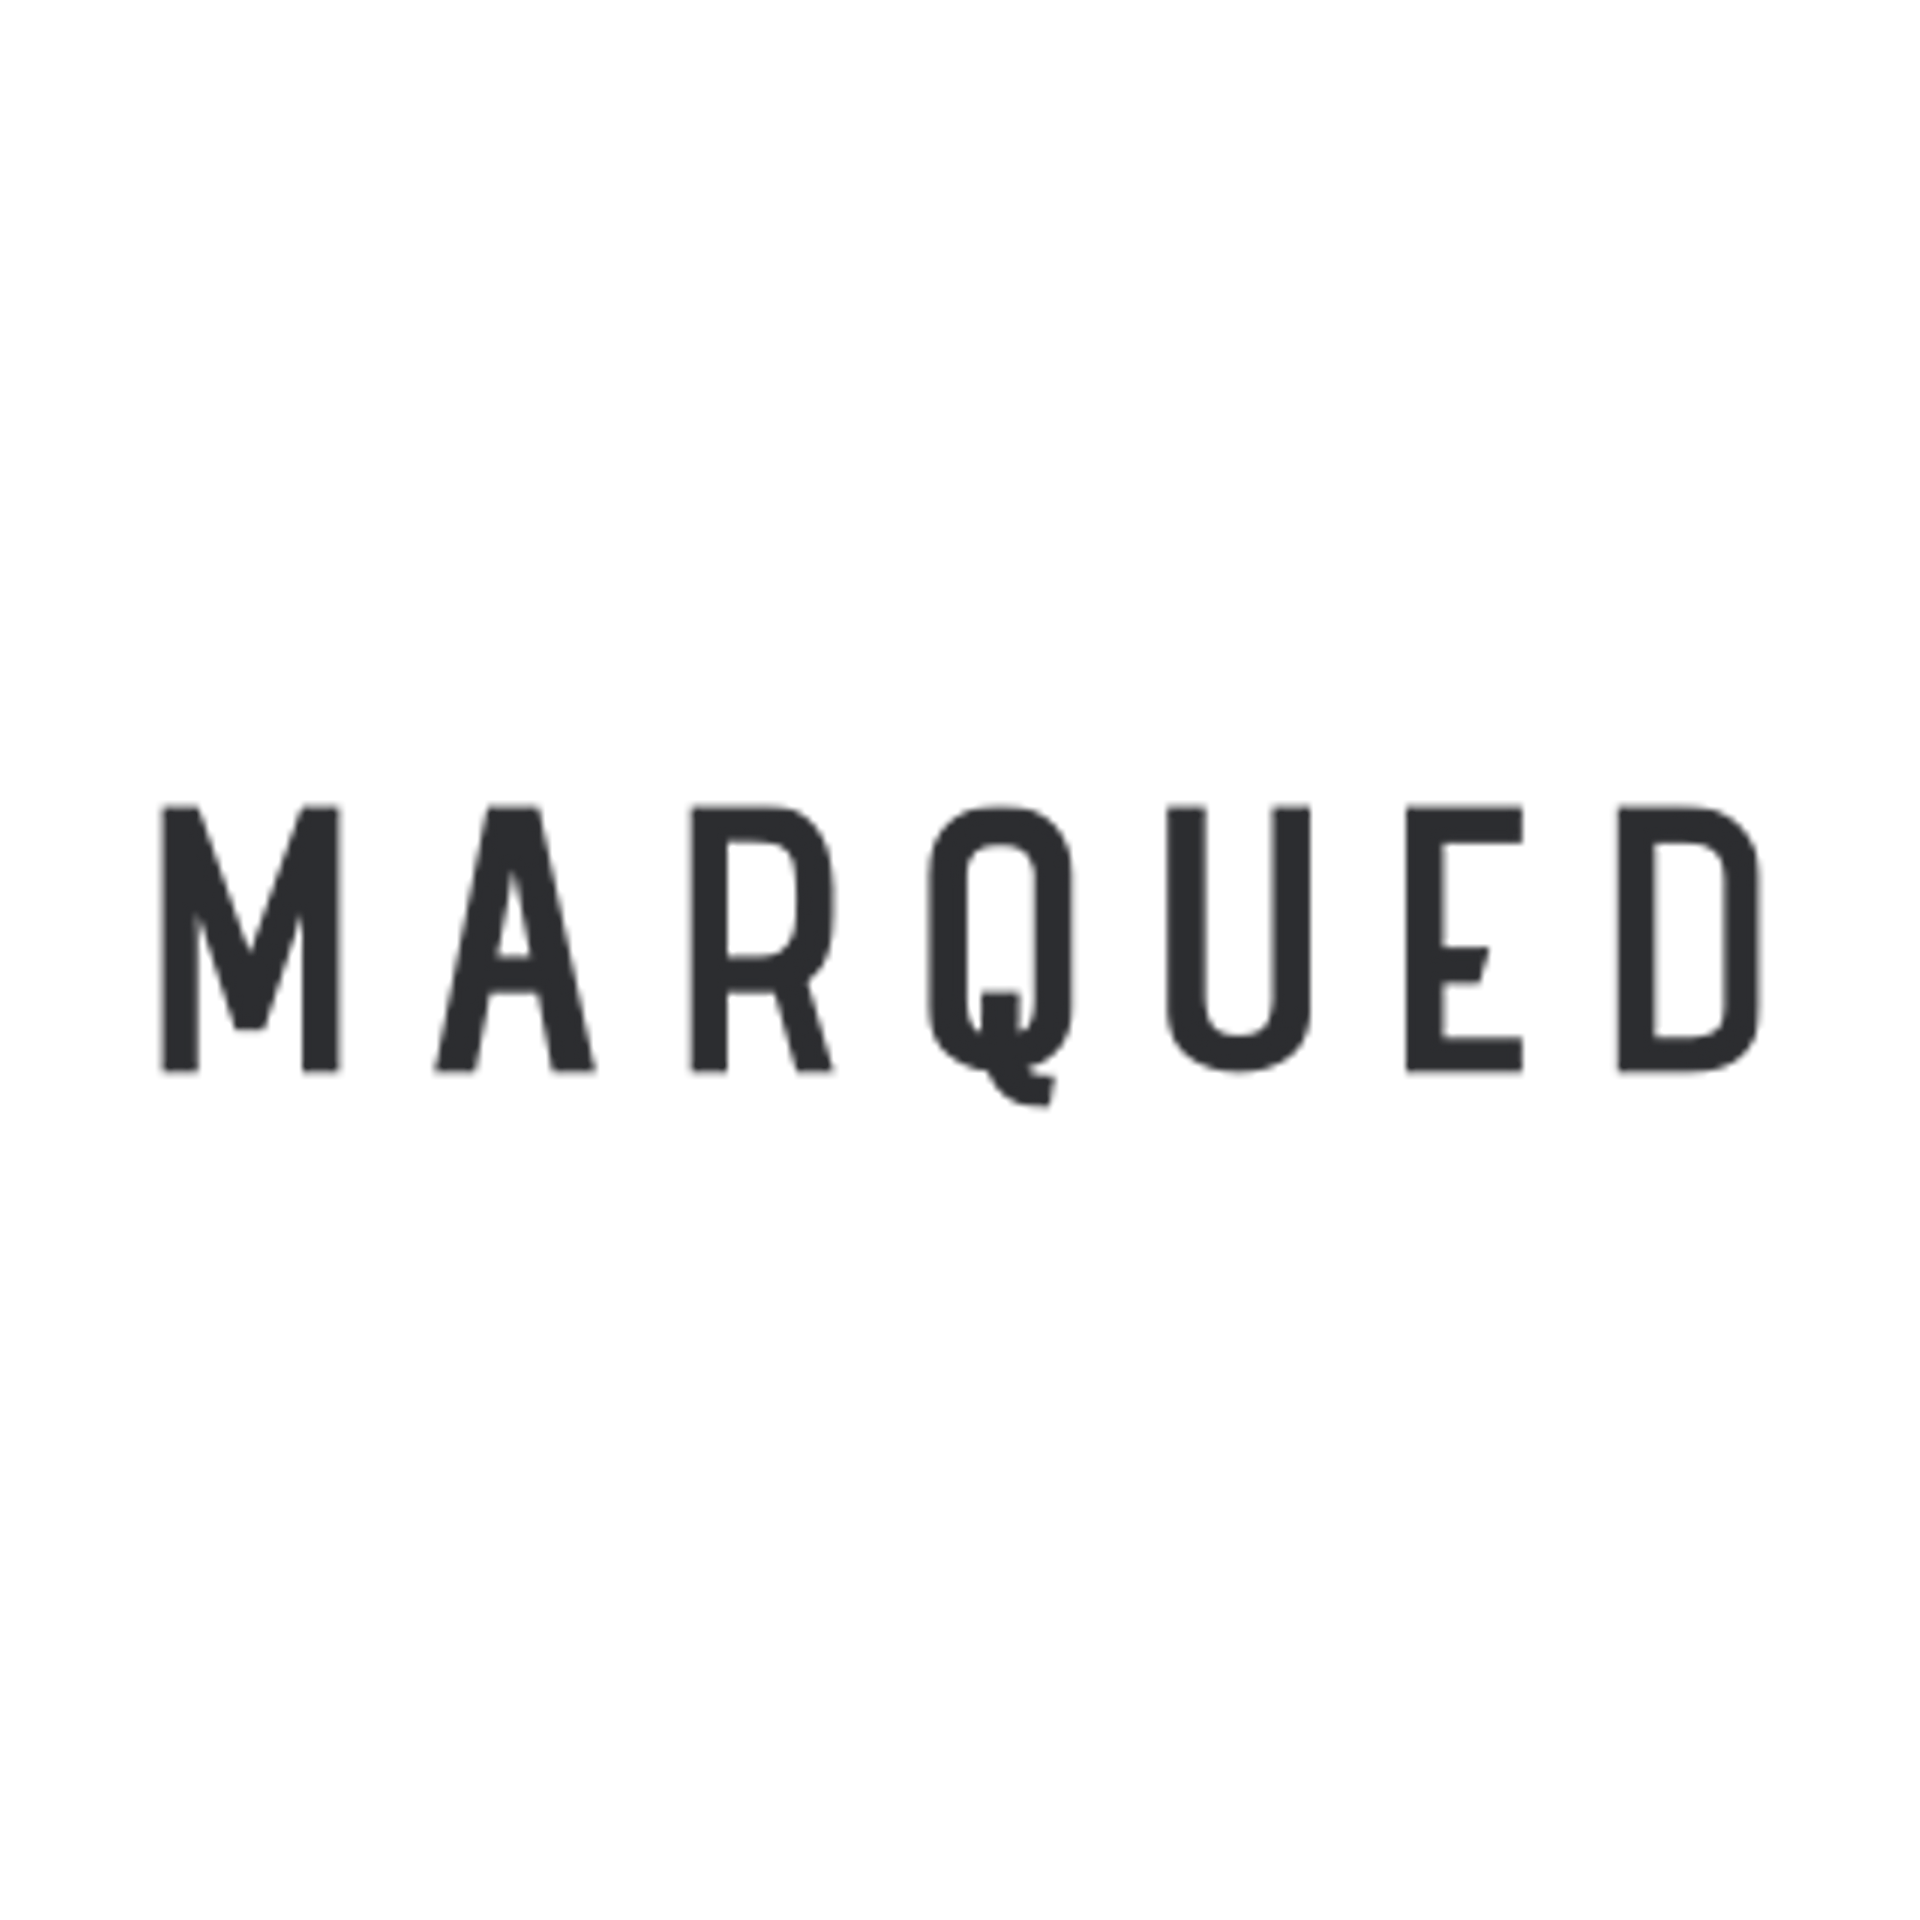 Marqued